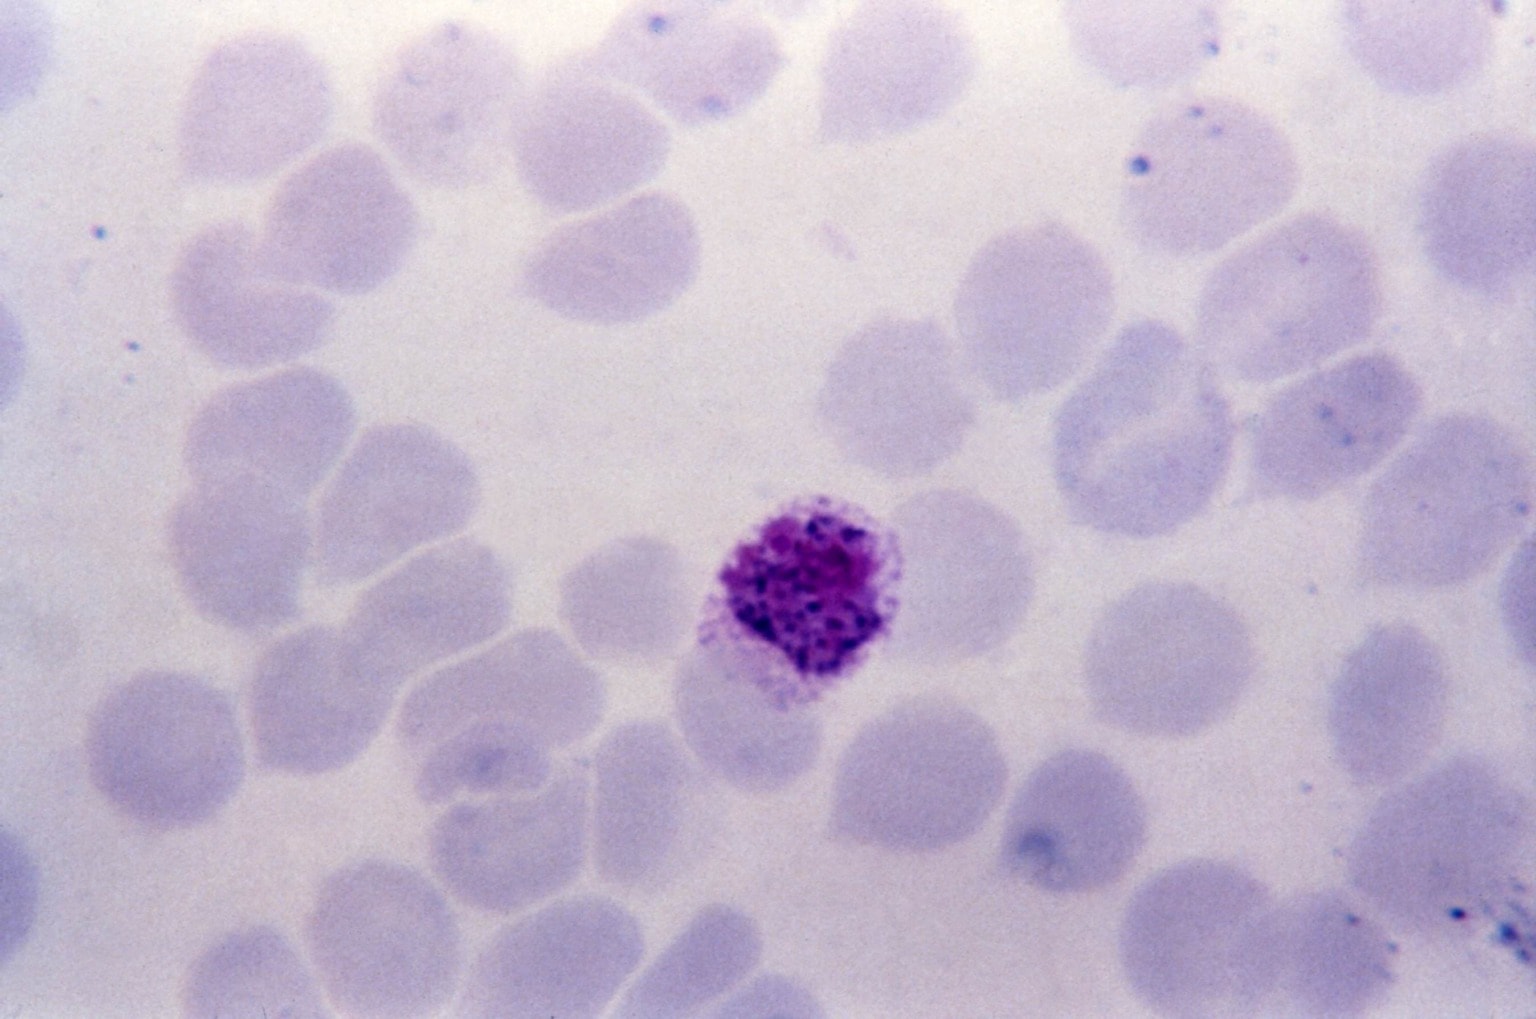 Free picture: thin, film, micrograph, plasmodium vivax, microgametocyte